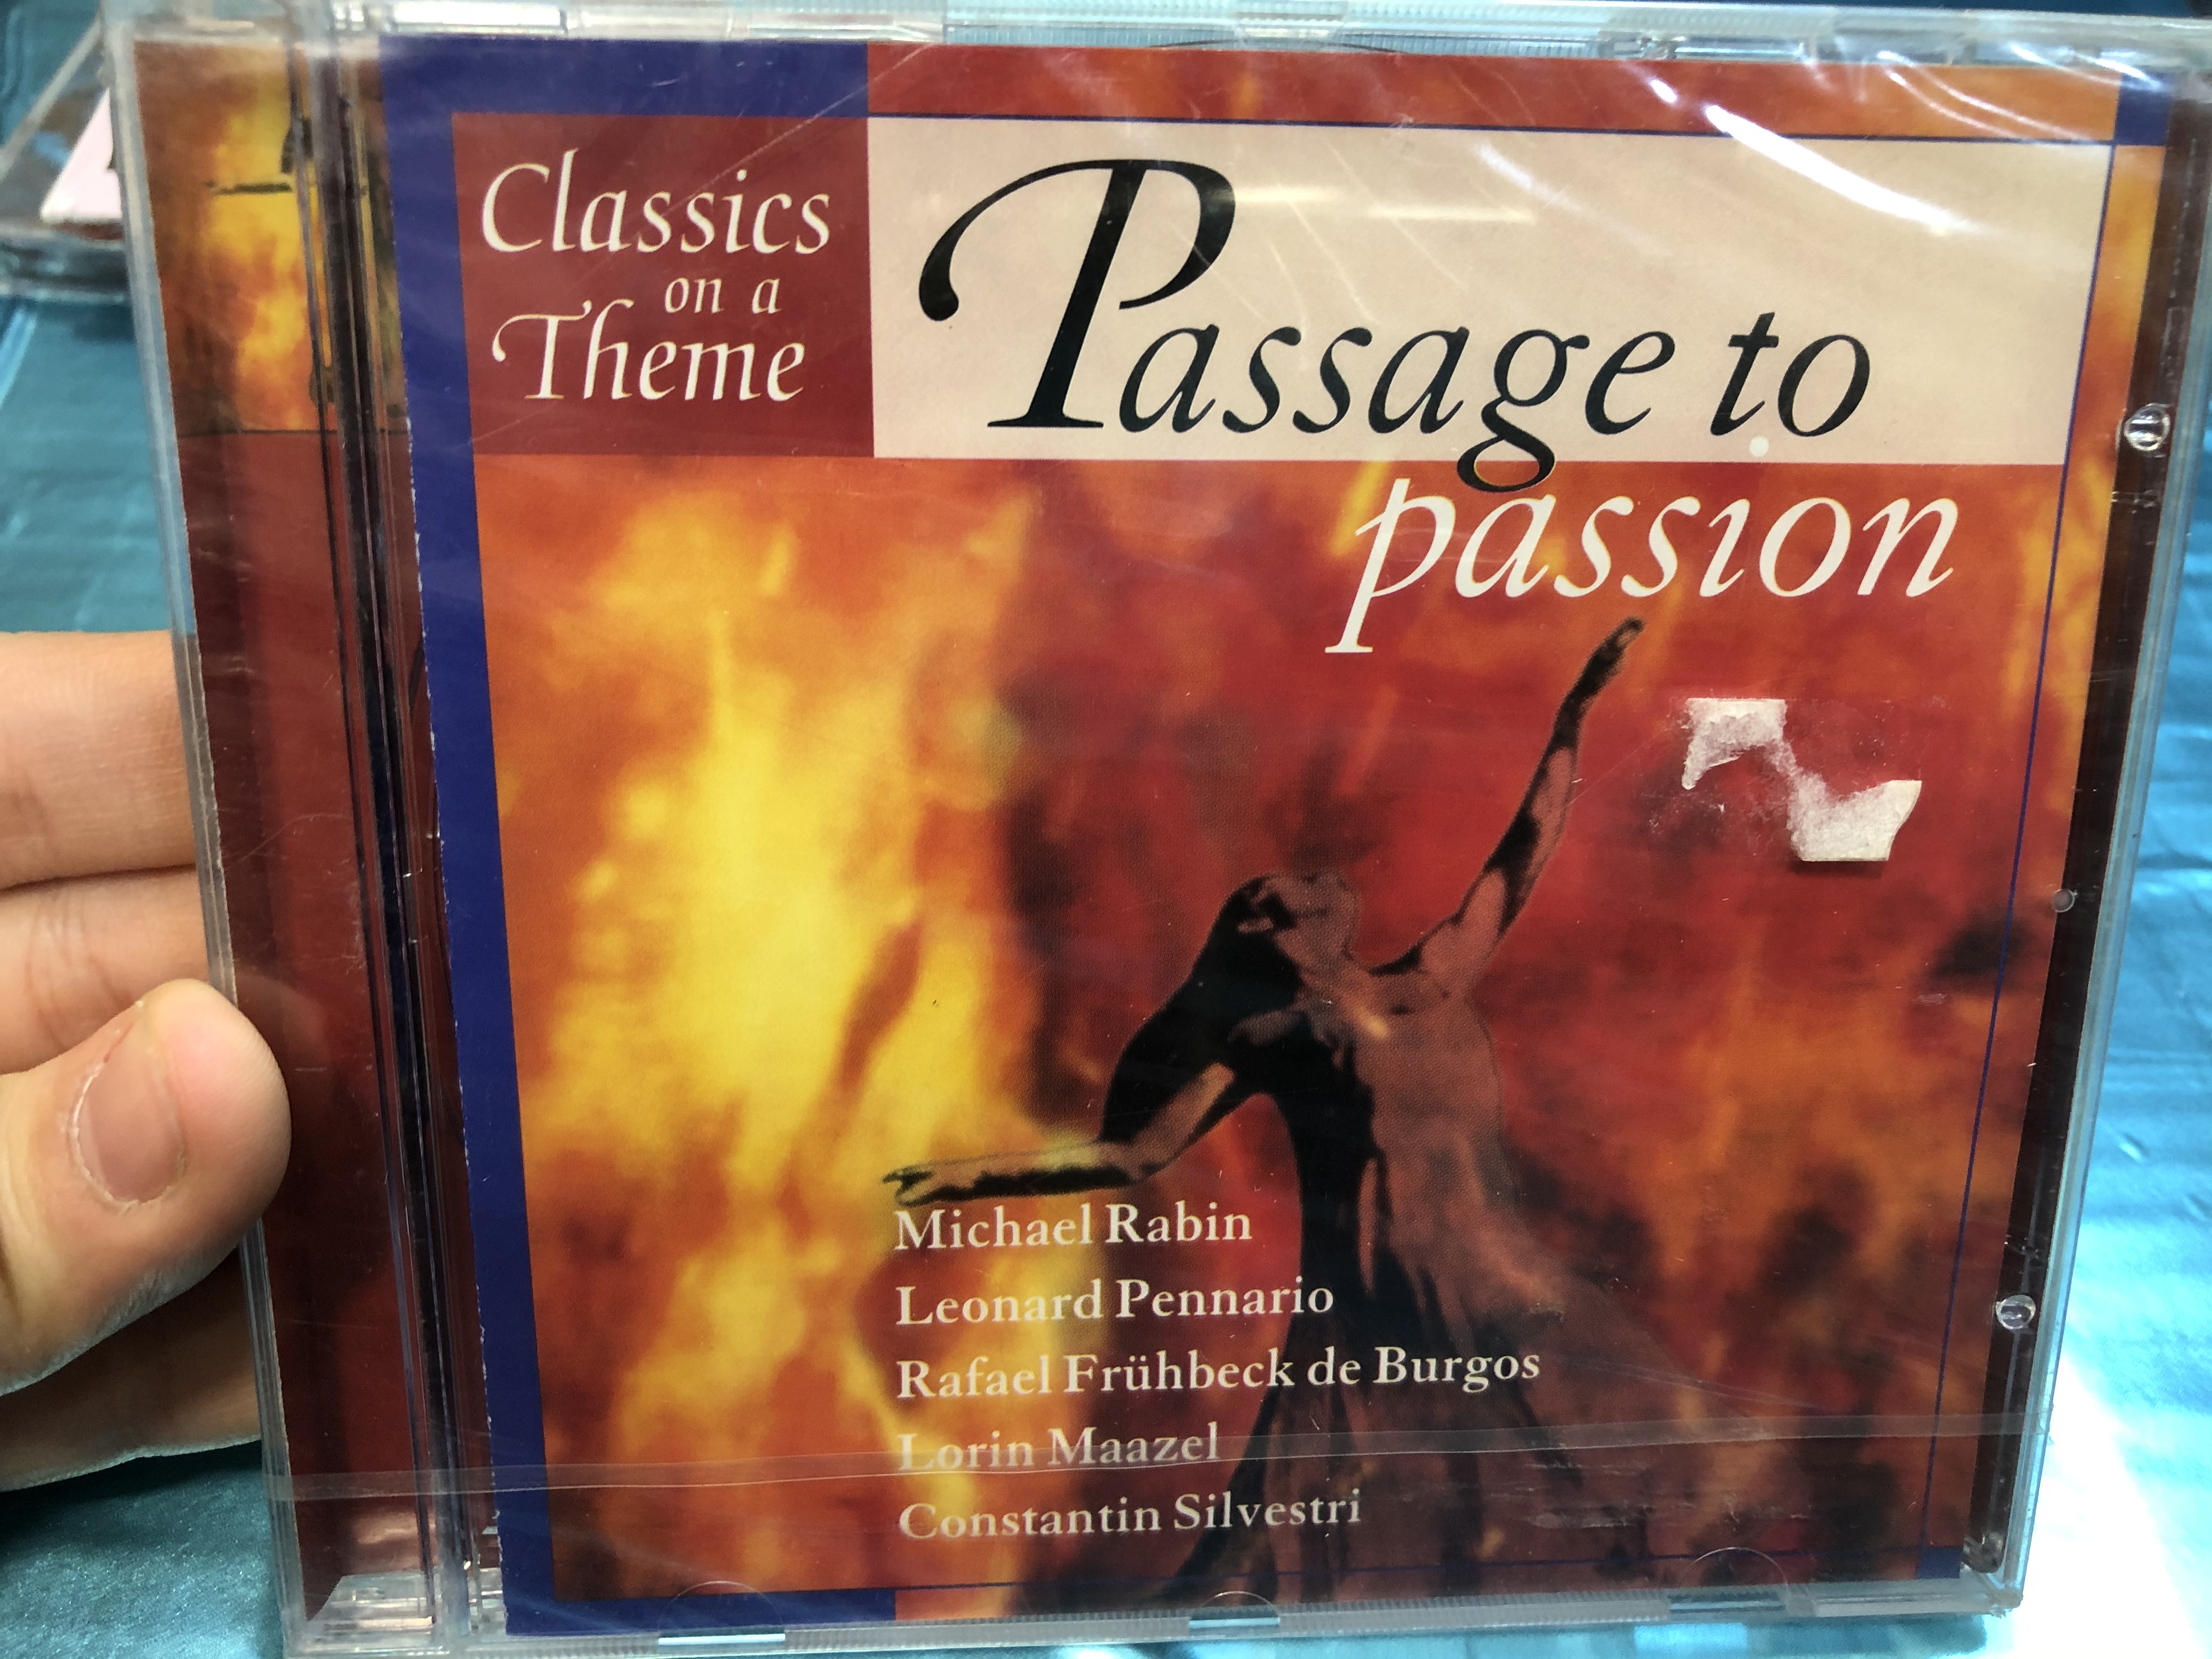 classics-on-a-theme-passage-to-passion-michael-rabin-leonard-pennario-rafael-fruhbeck-de-burgos-lorin-maazel-constantin-silvestri-disky-classics-audio-cd-2000-dcl-705632-1-.jpg